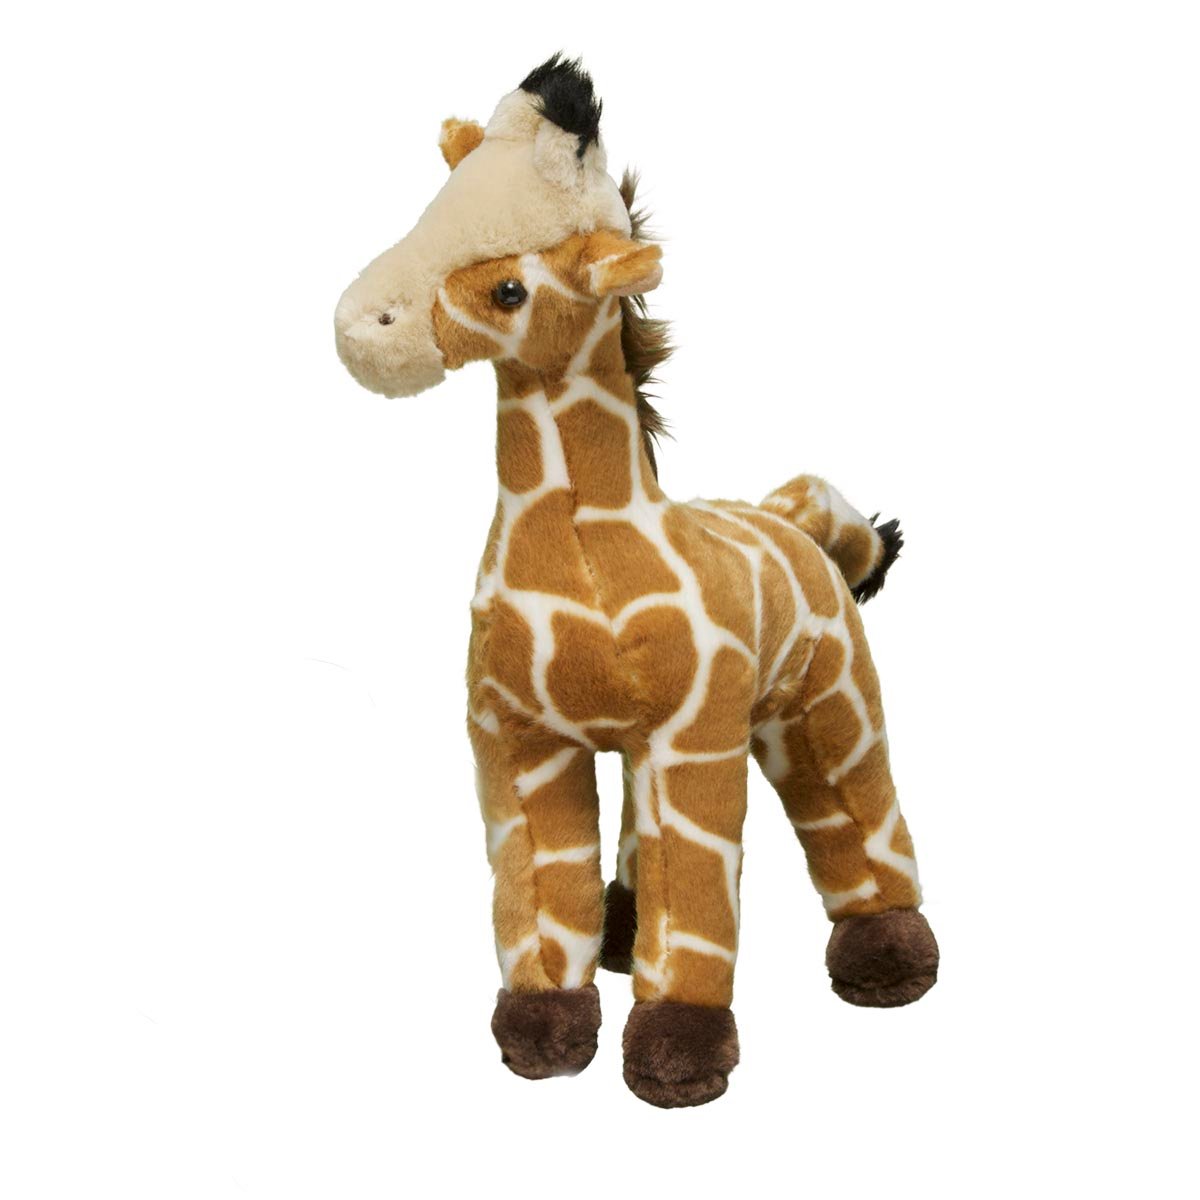 Adopt A Giraffe Symbolic Animal Adoptions From Wwf